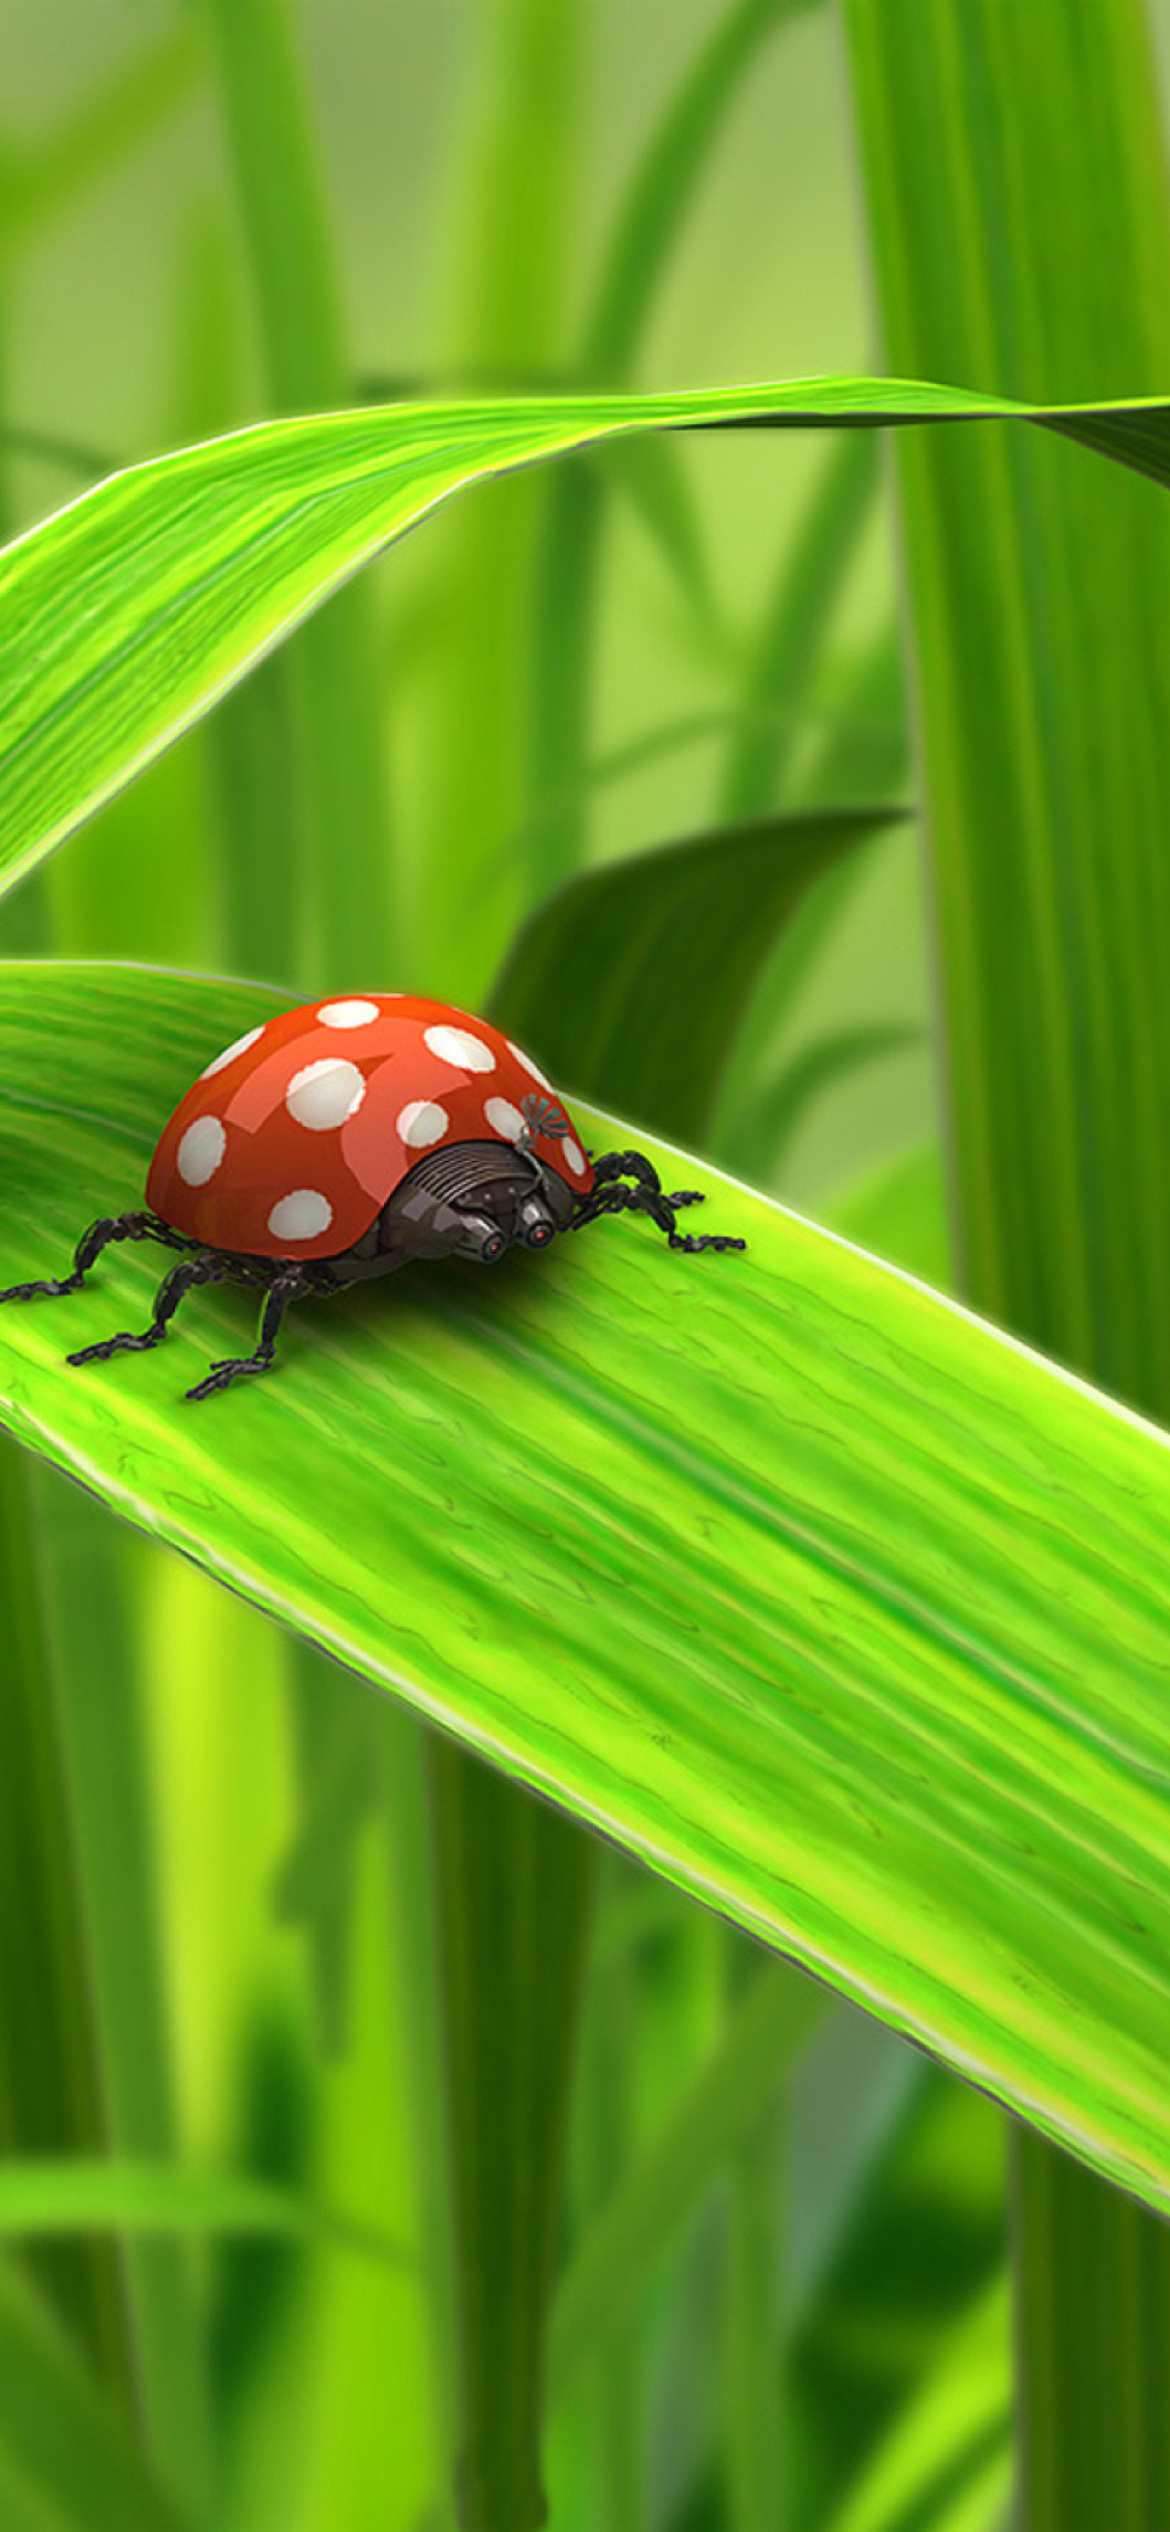 Red Ladybug On Green Grass wallpaper 1170x2532